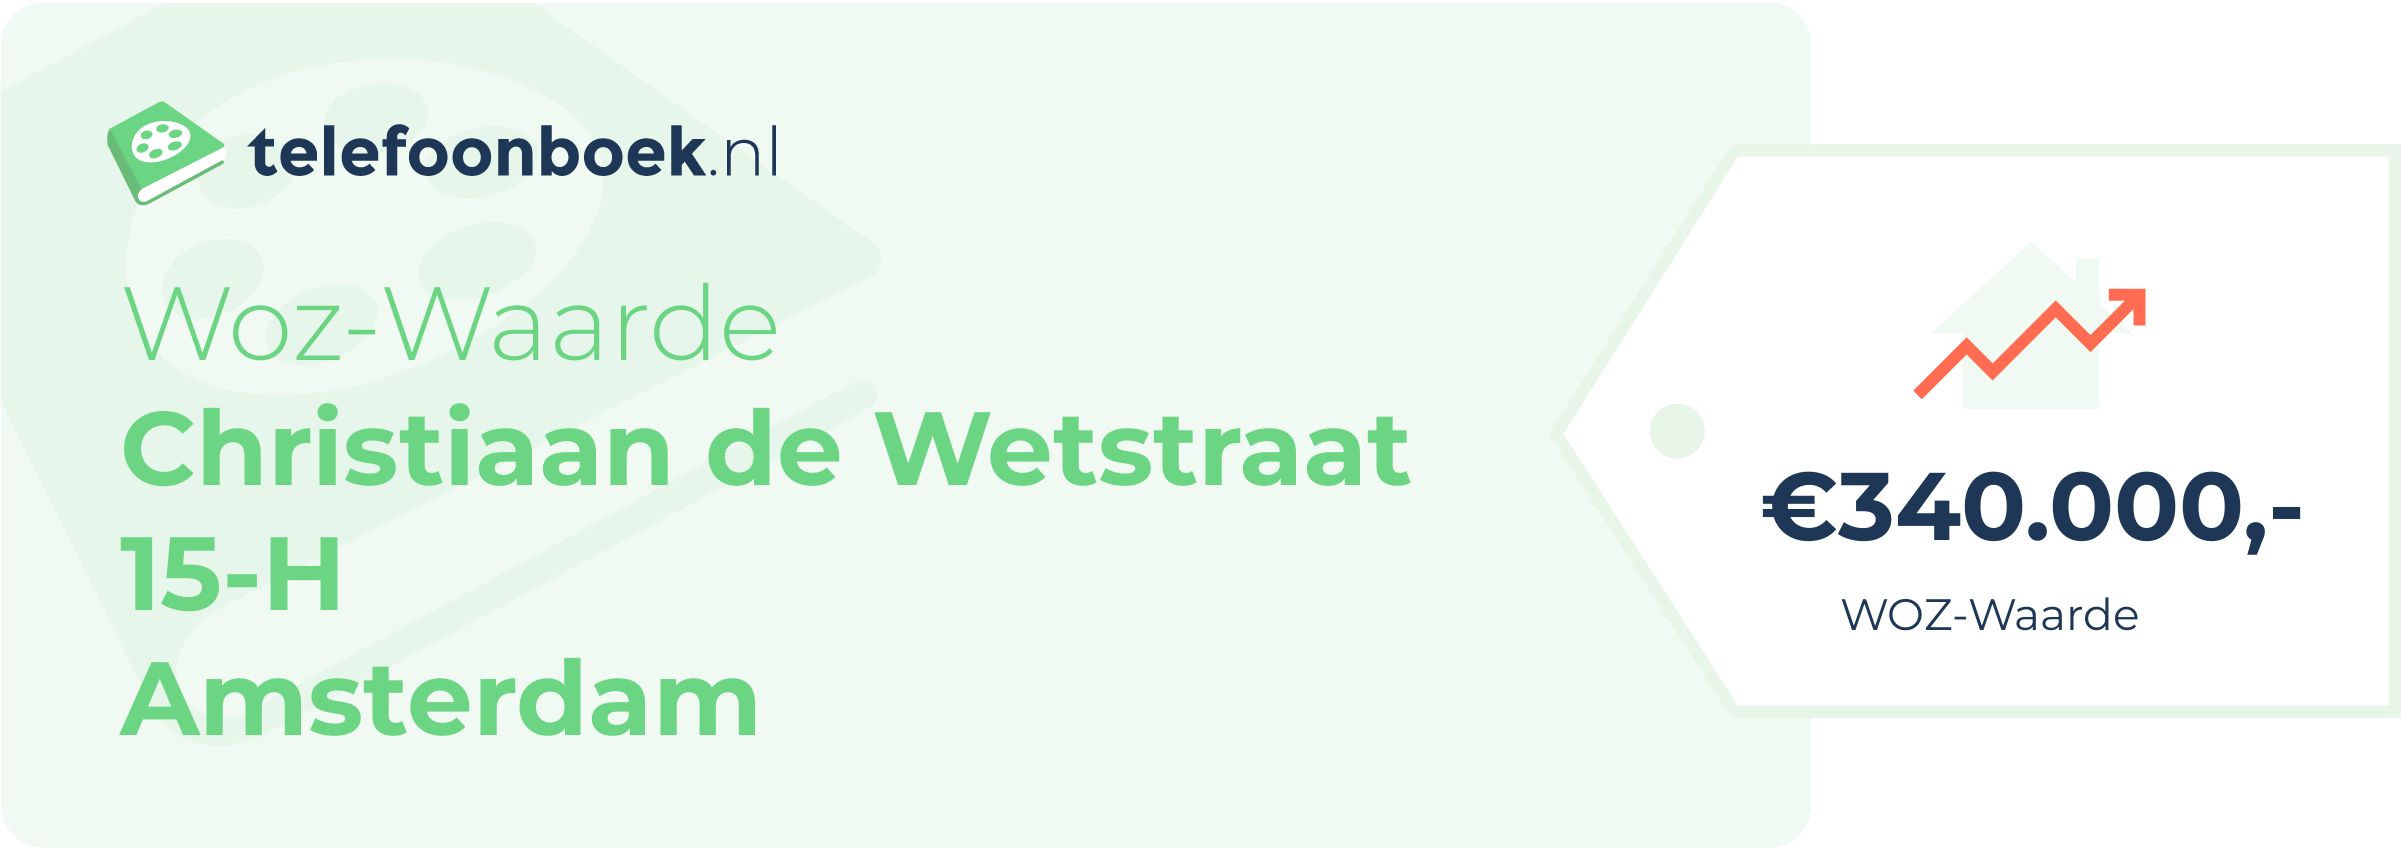 WOZ-waarde Christiaan De Wetstraat 15-H Amsterdam